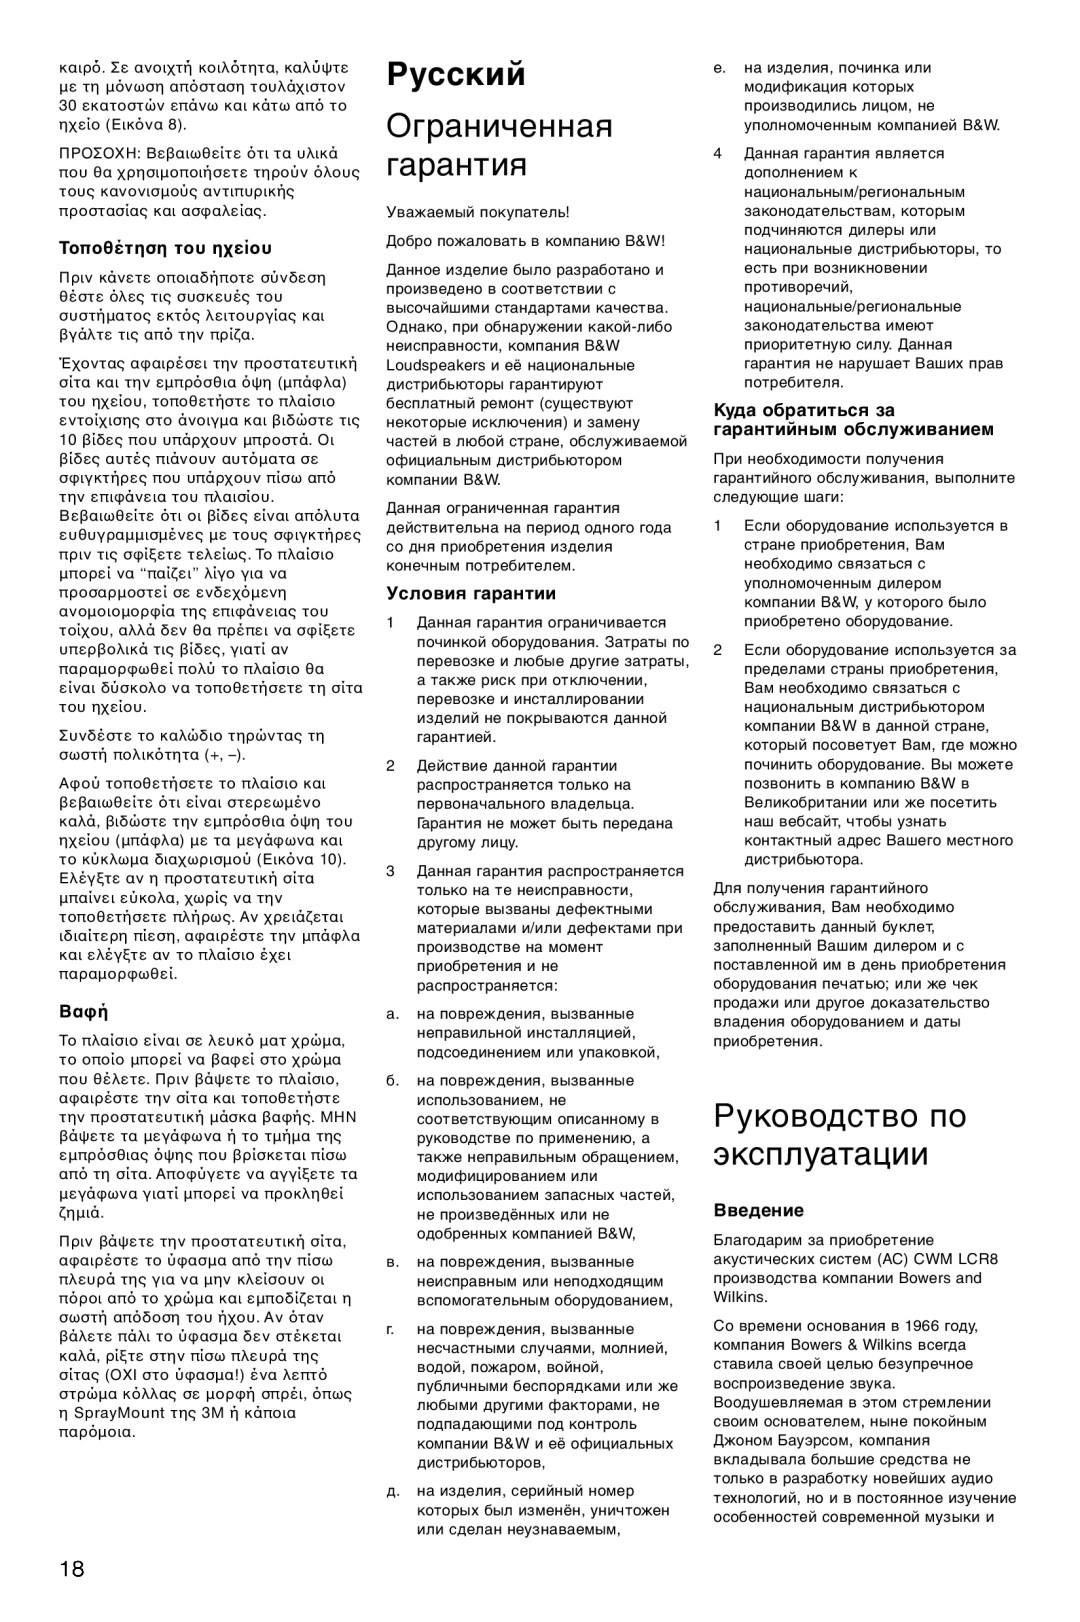 Bowers & Wilkins CWM-LCR8 Русский, Ограниченная гарантия, Руководство по эксплуатации, Условия гарантии, Введение 